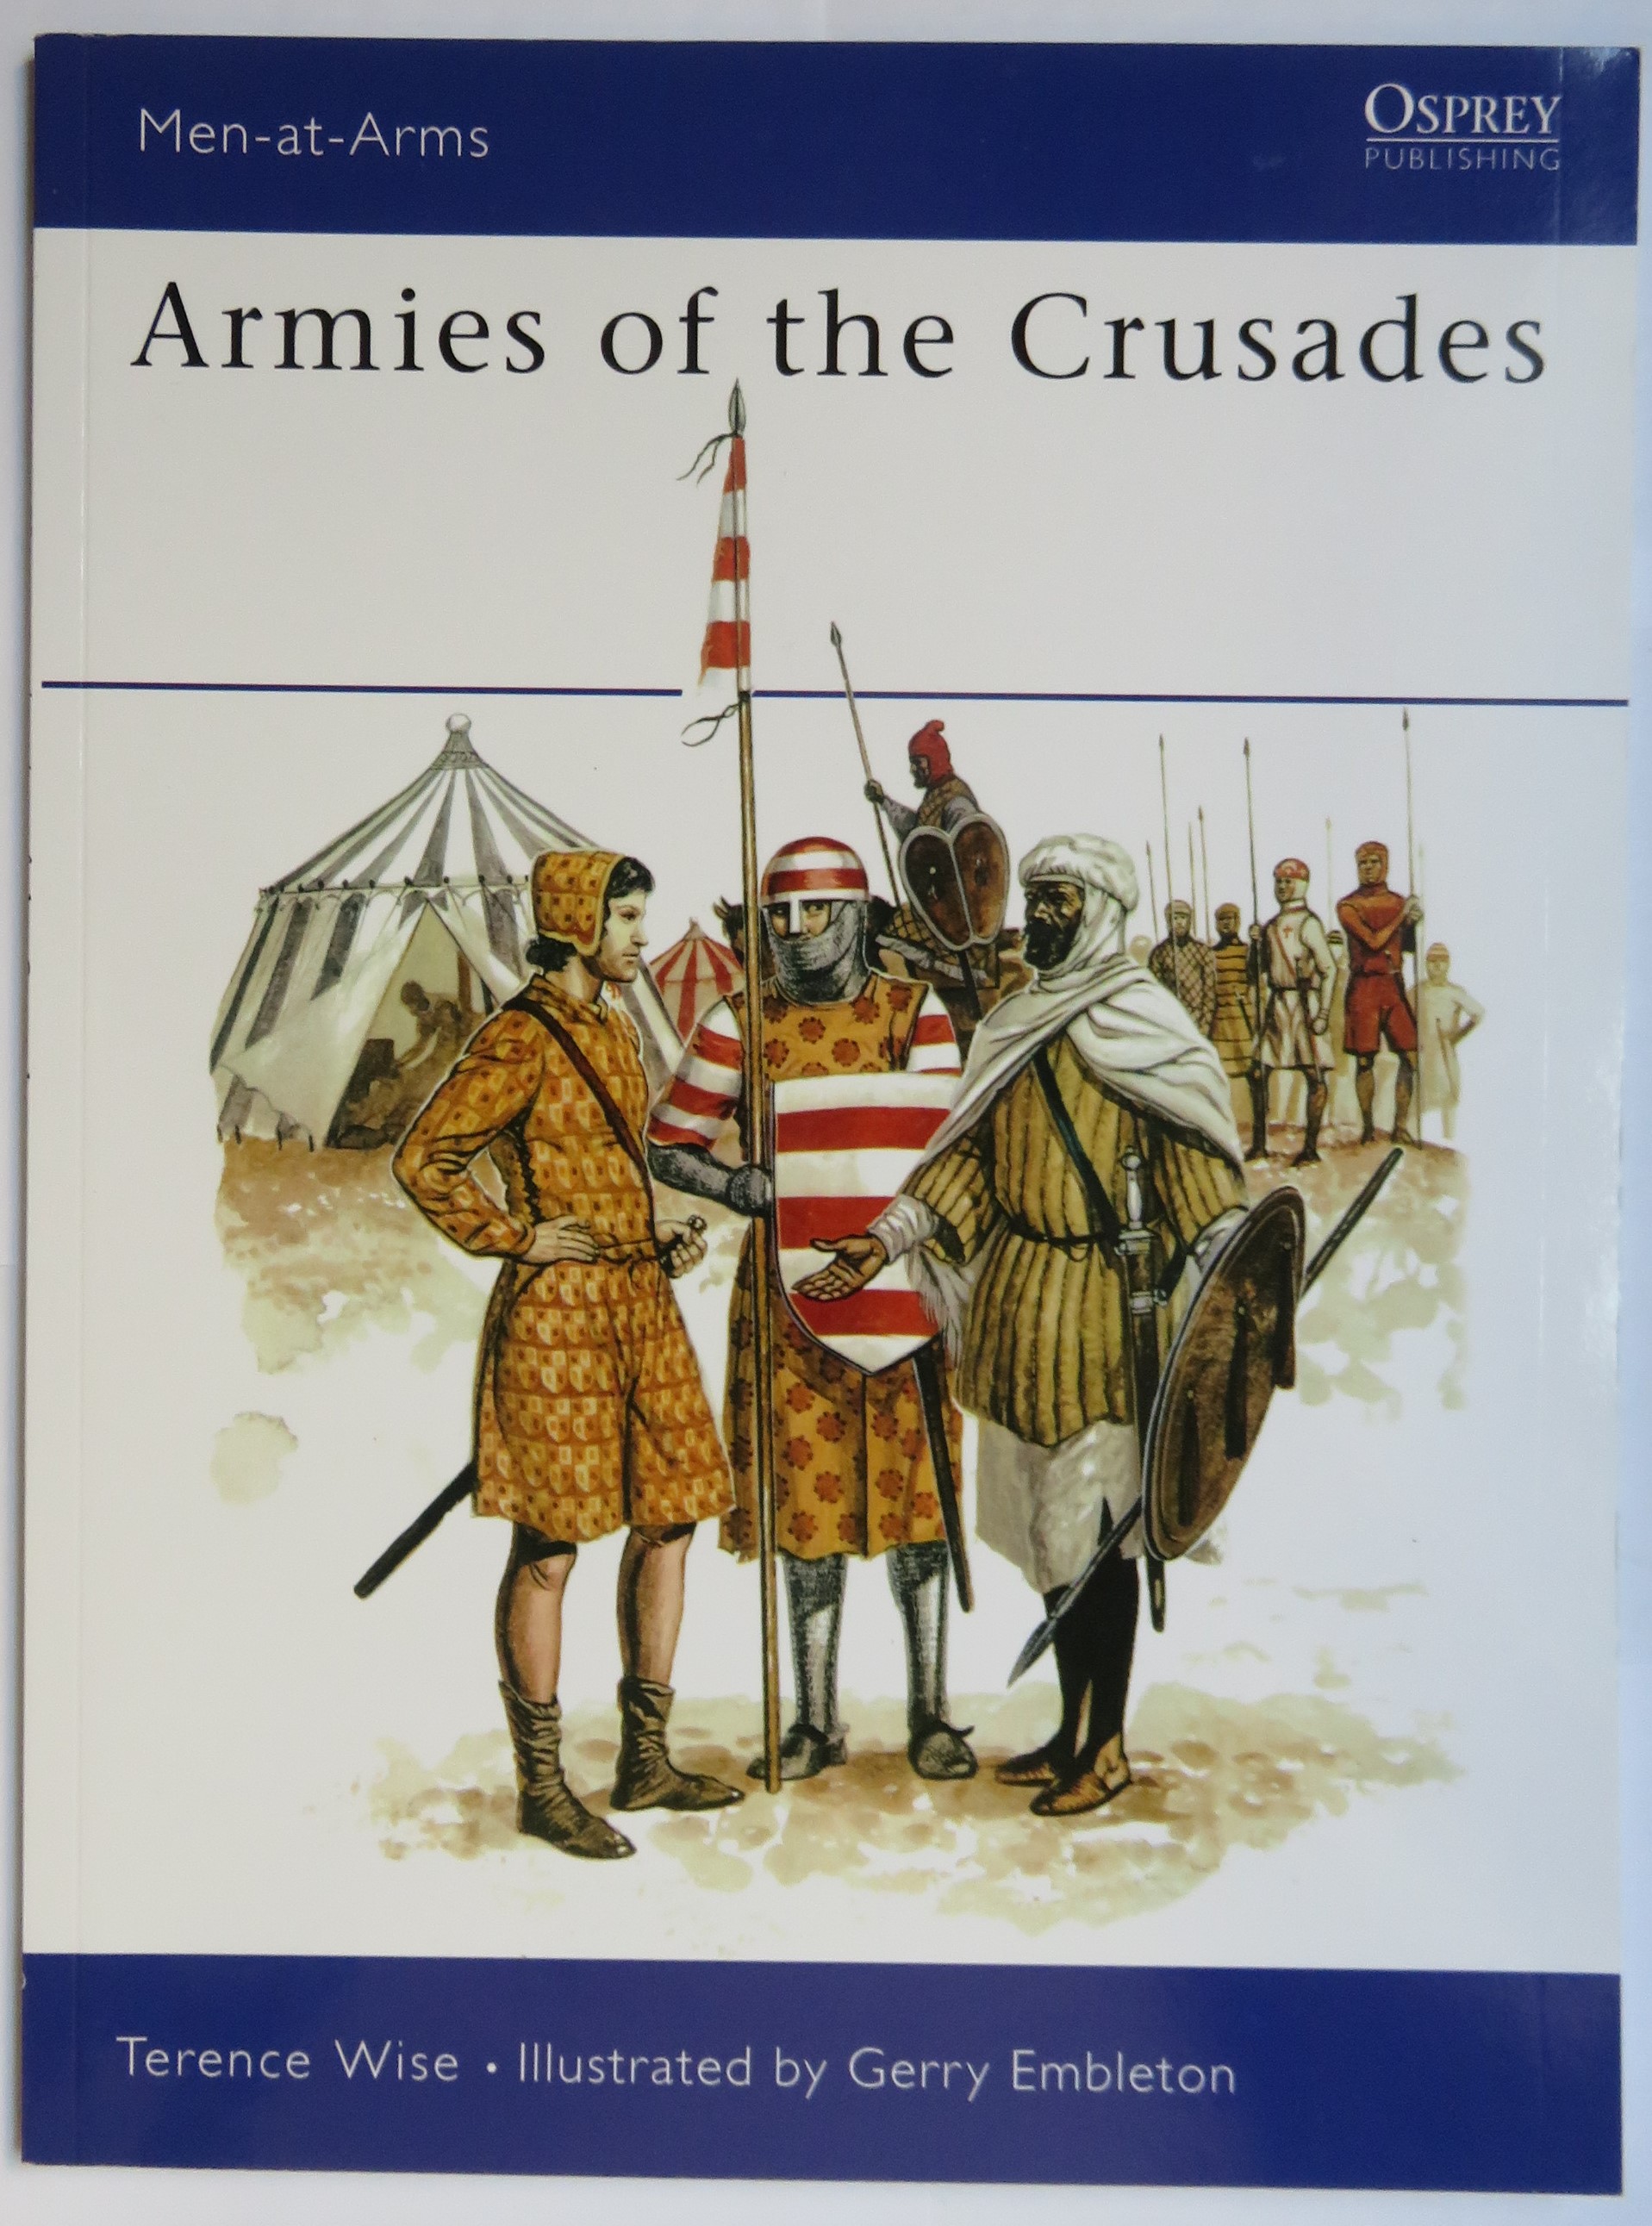 Men-at-Arms 75 Armies of the Crusades